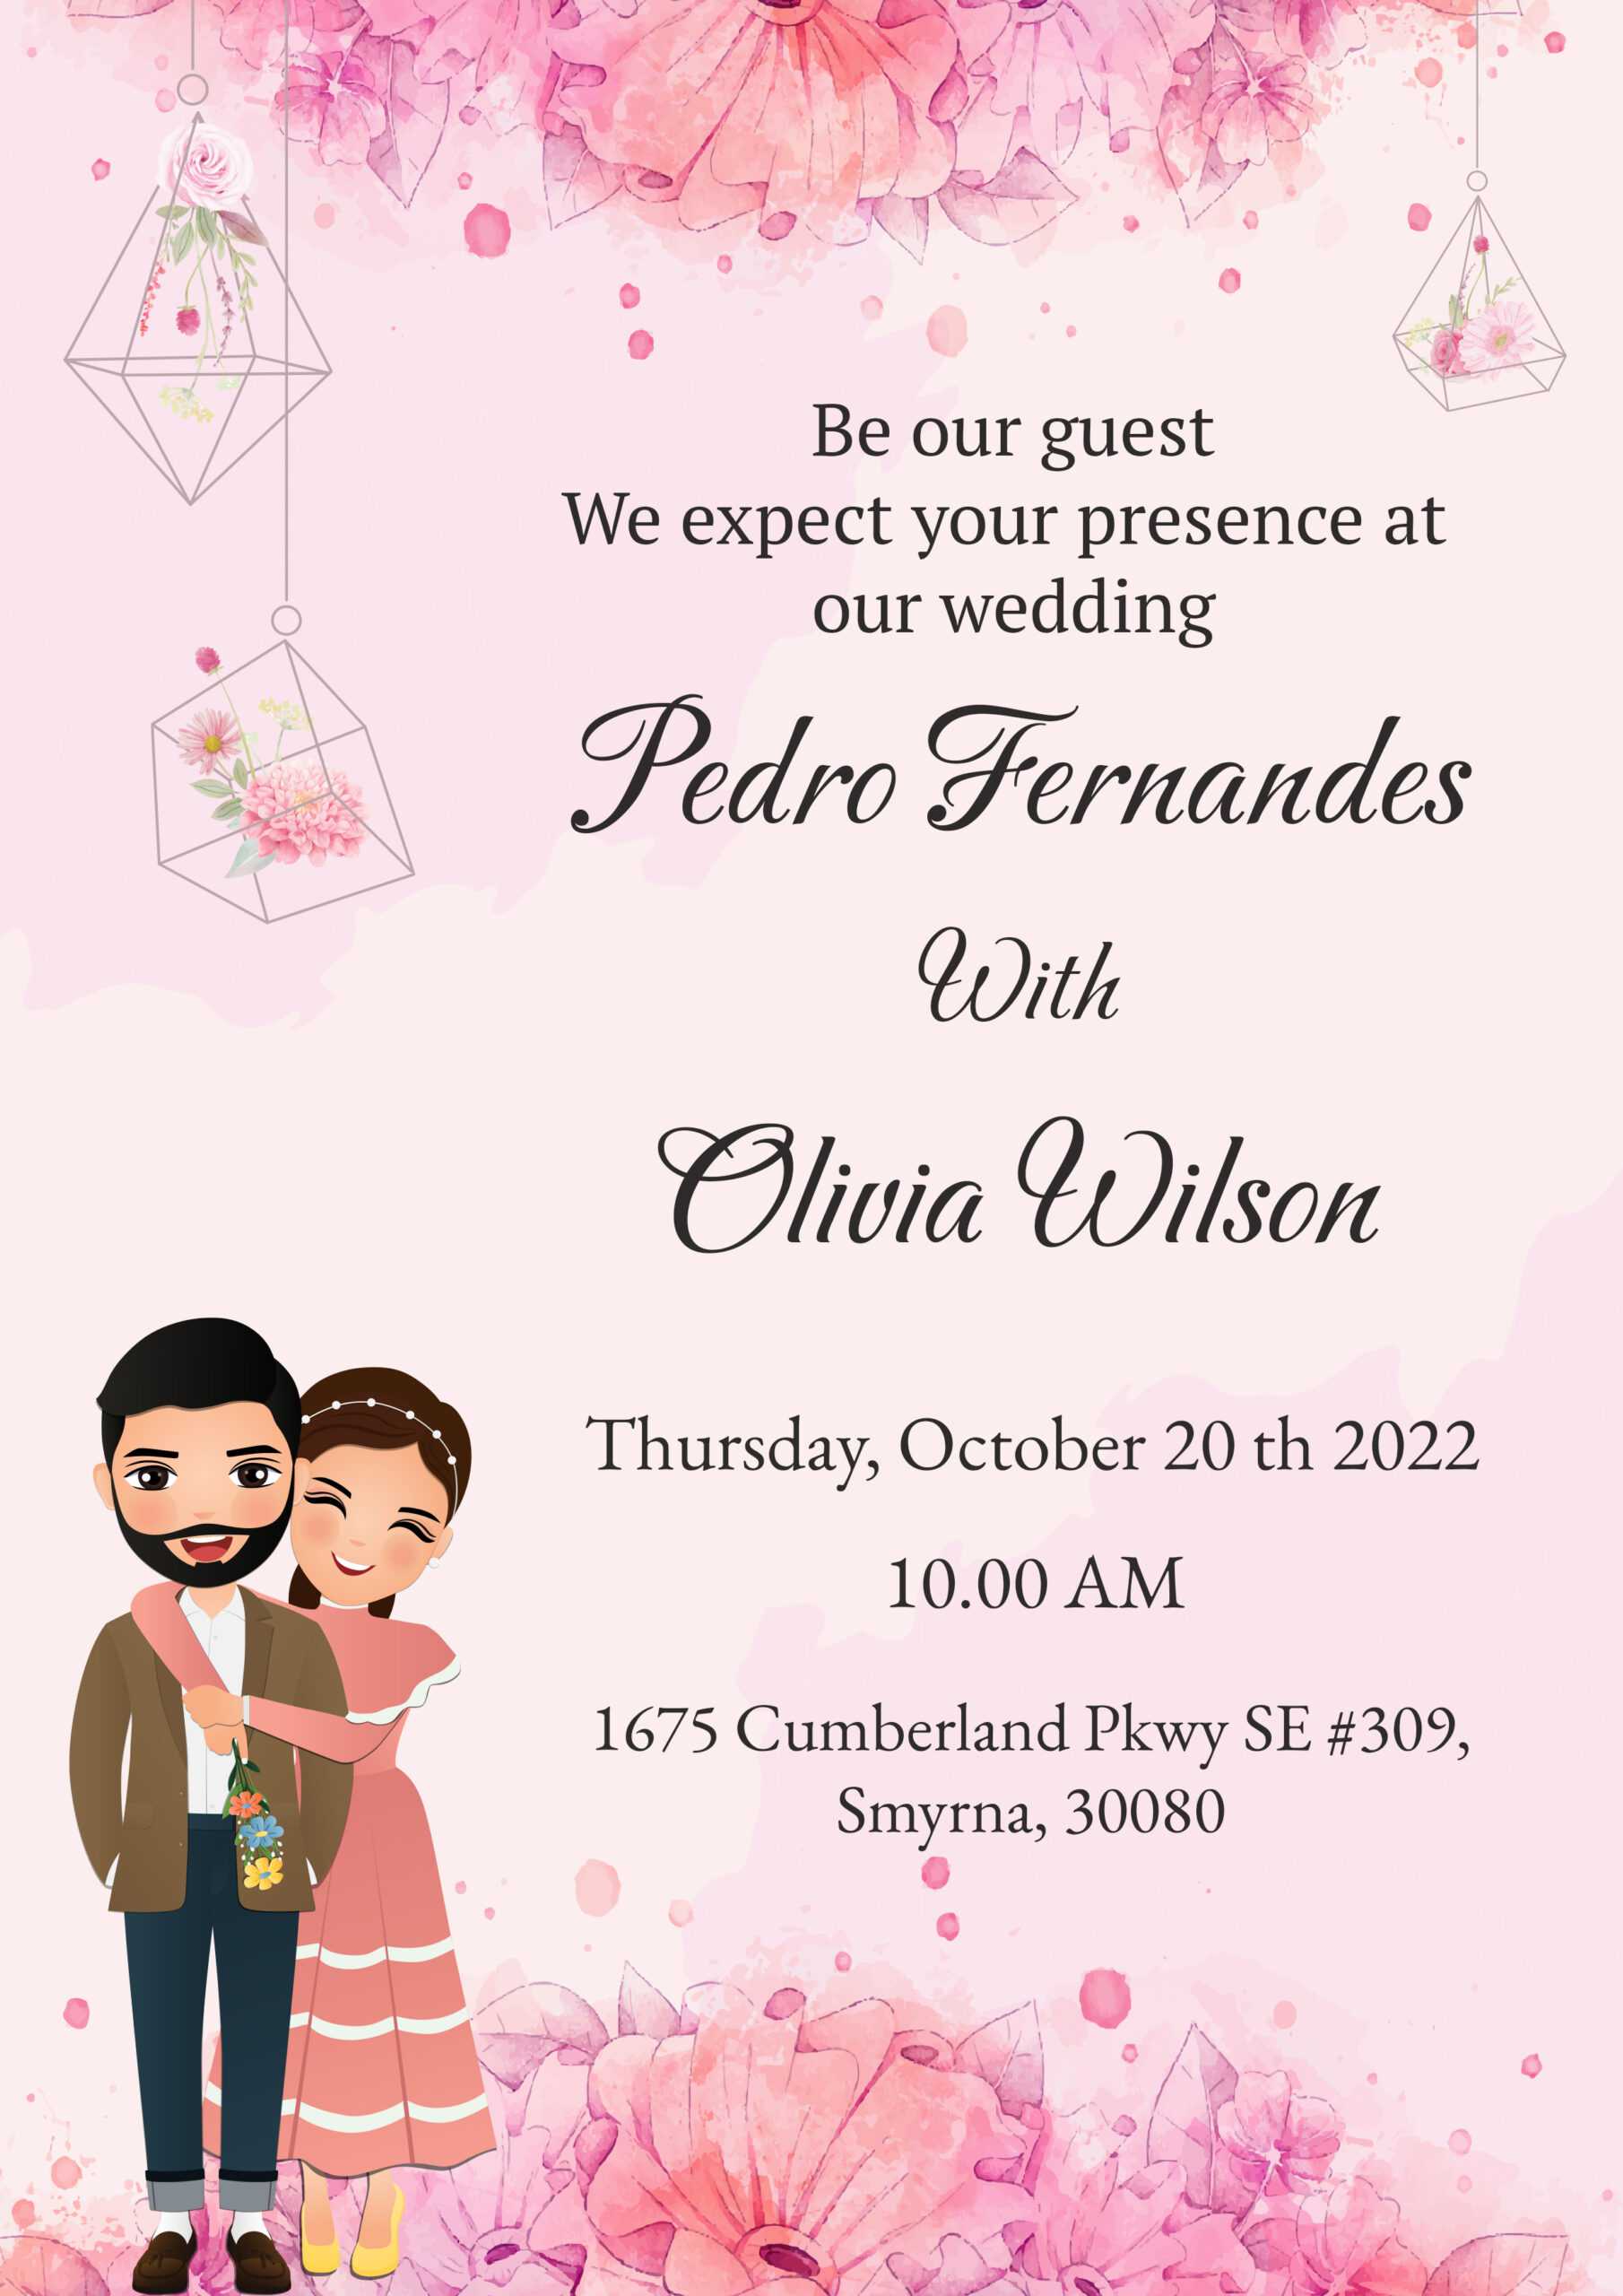 Unique Wedding Invitation Card: Creating Memorable First Impressions